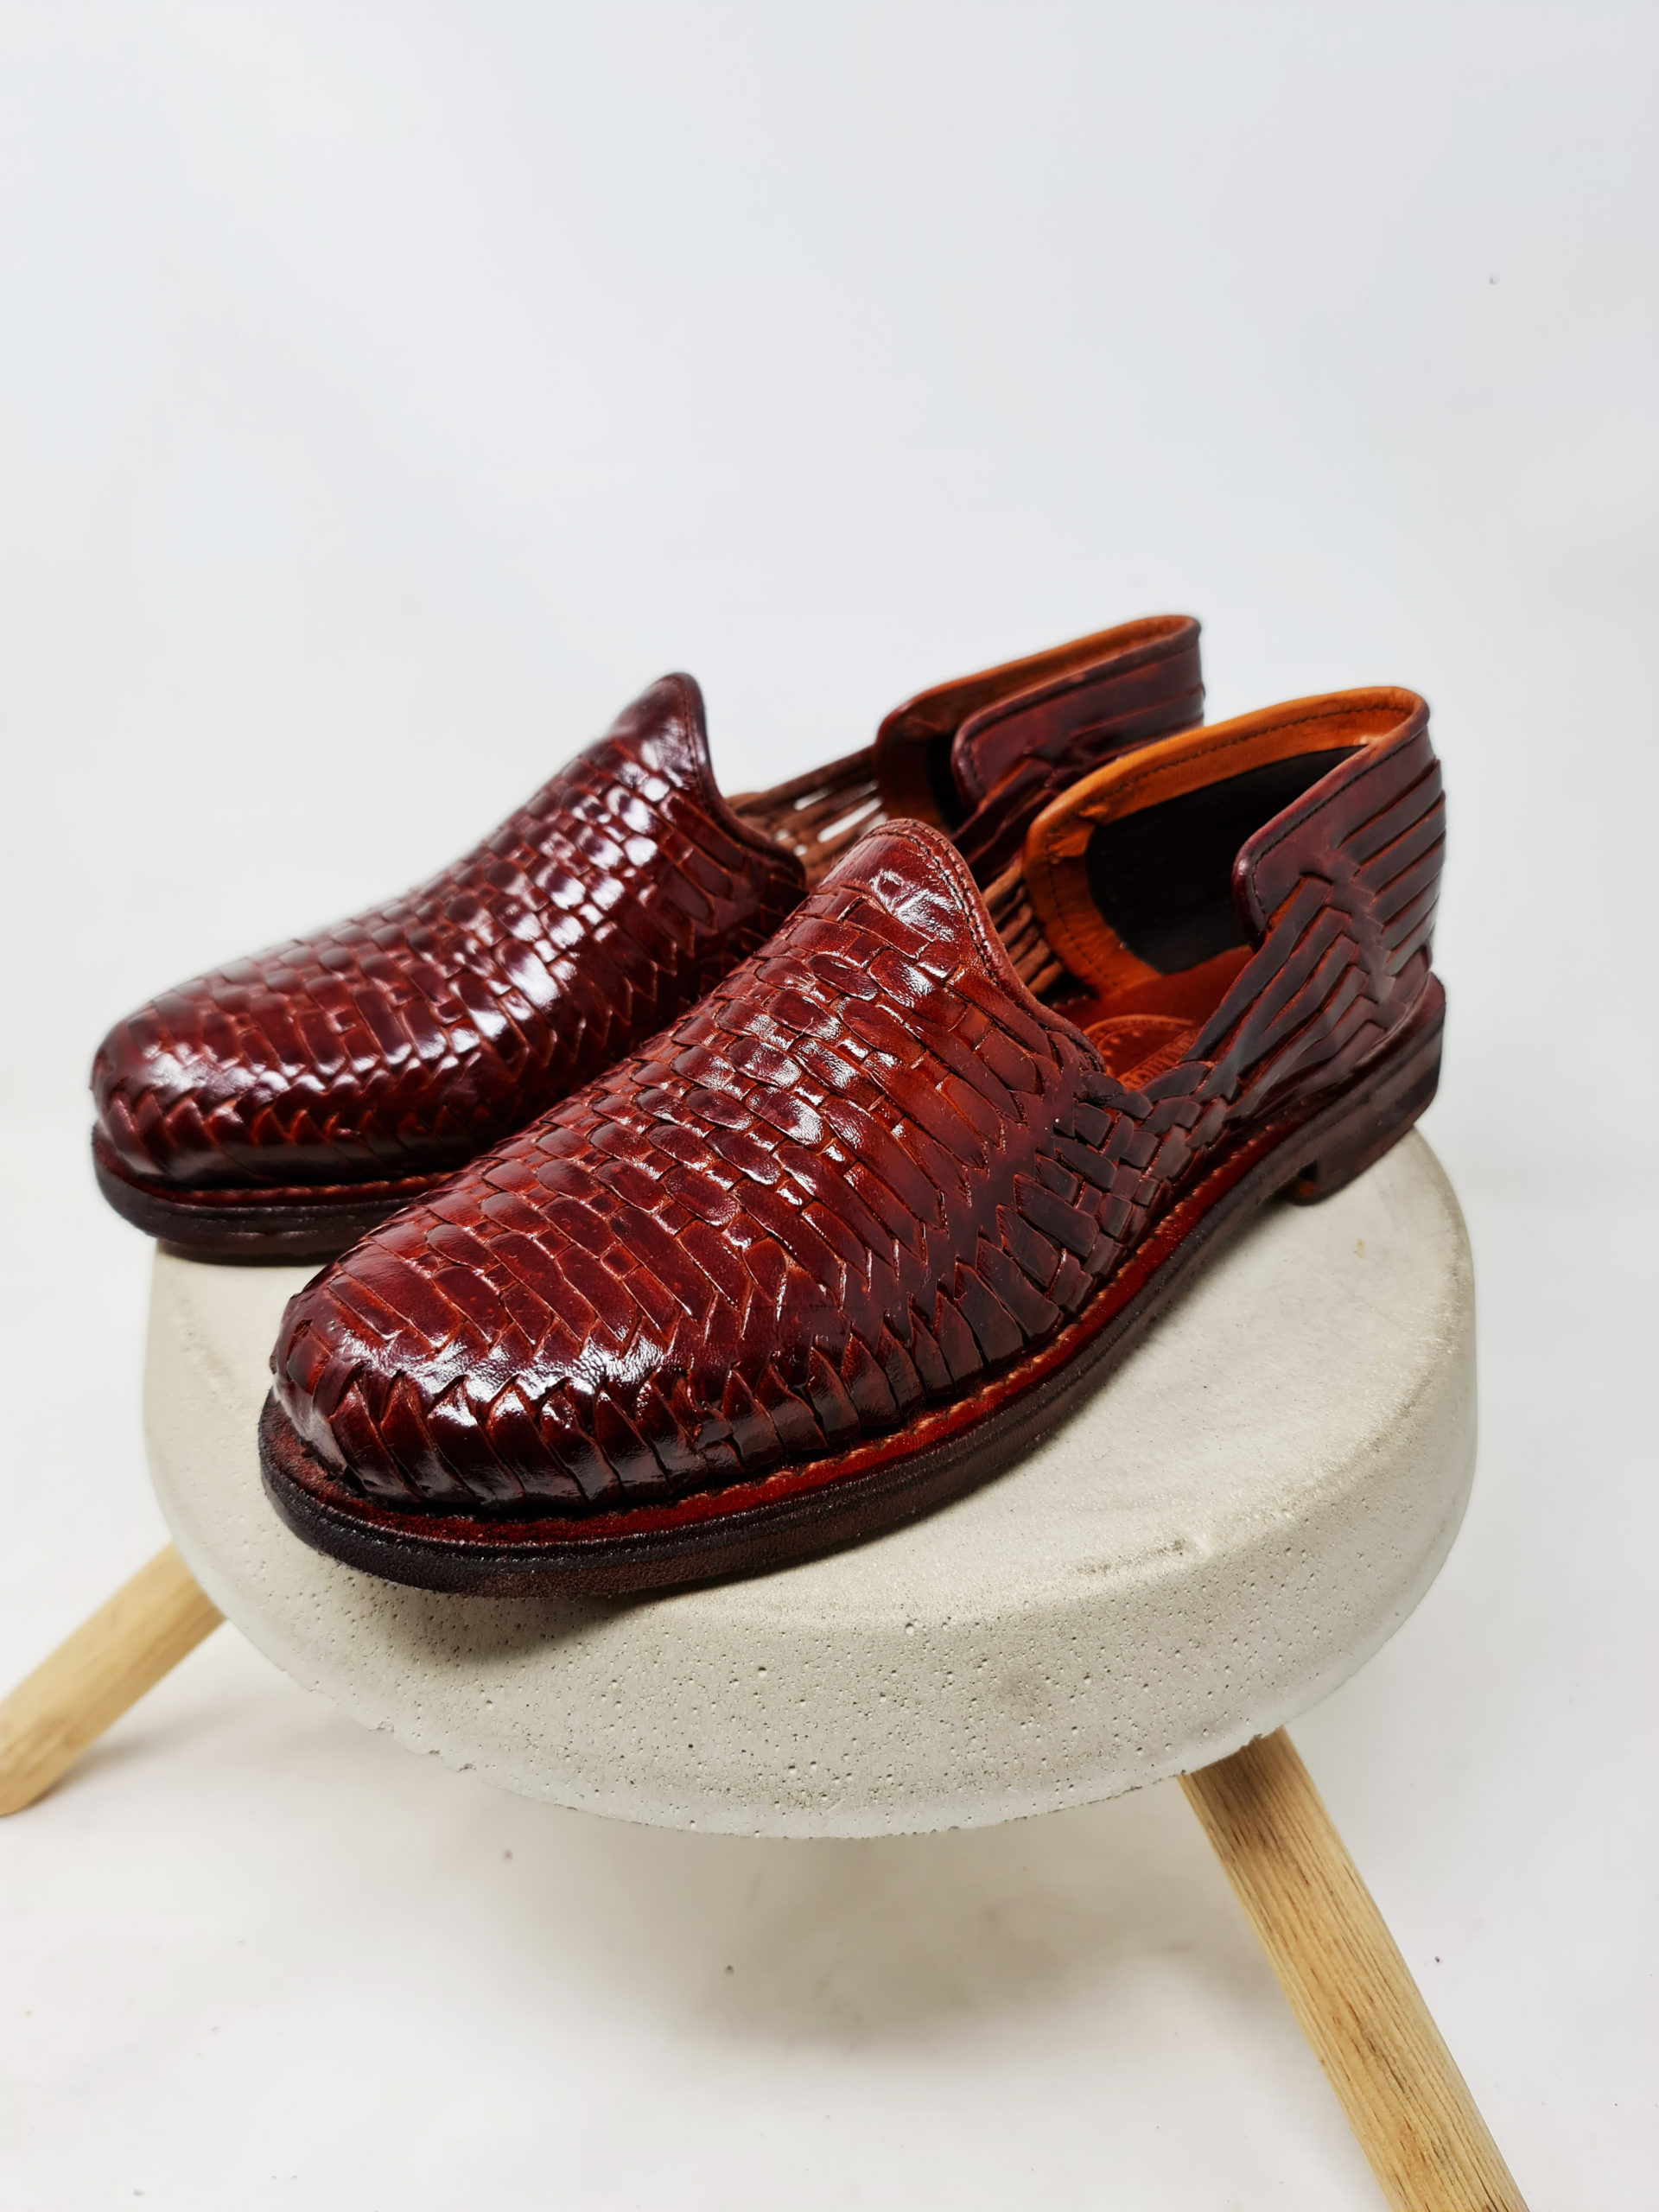 Men's closed-toe leather huaraches in wine color - KWARACHI